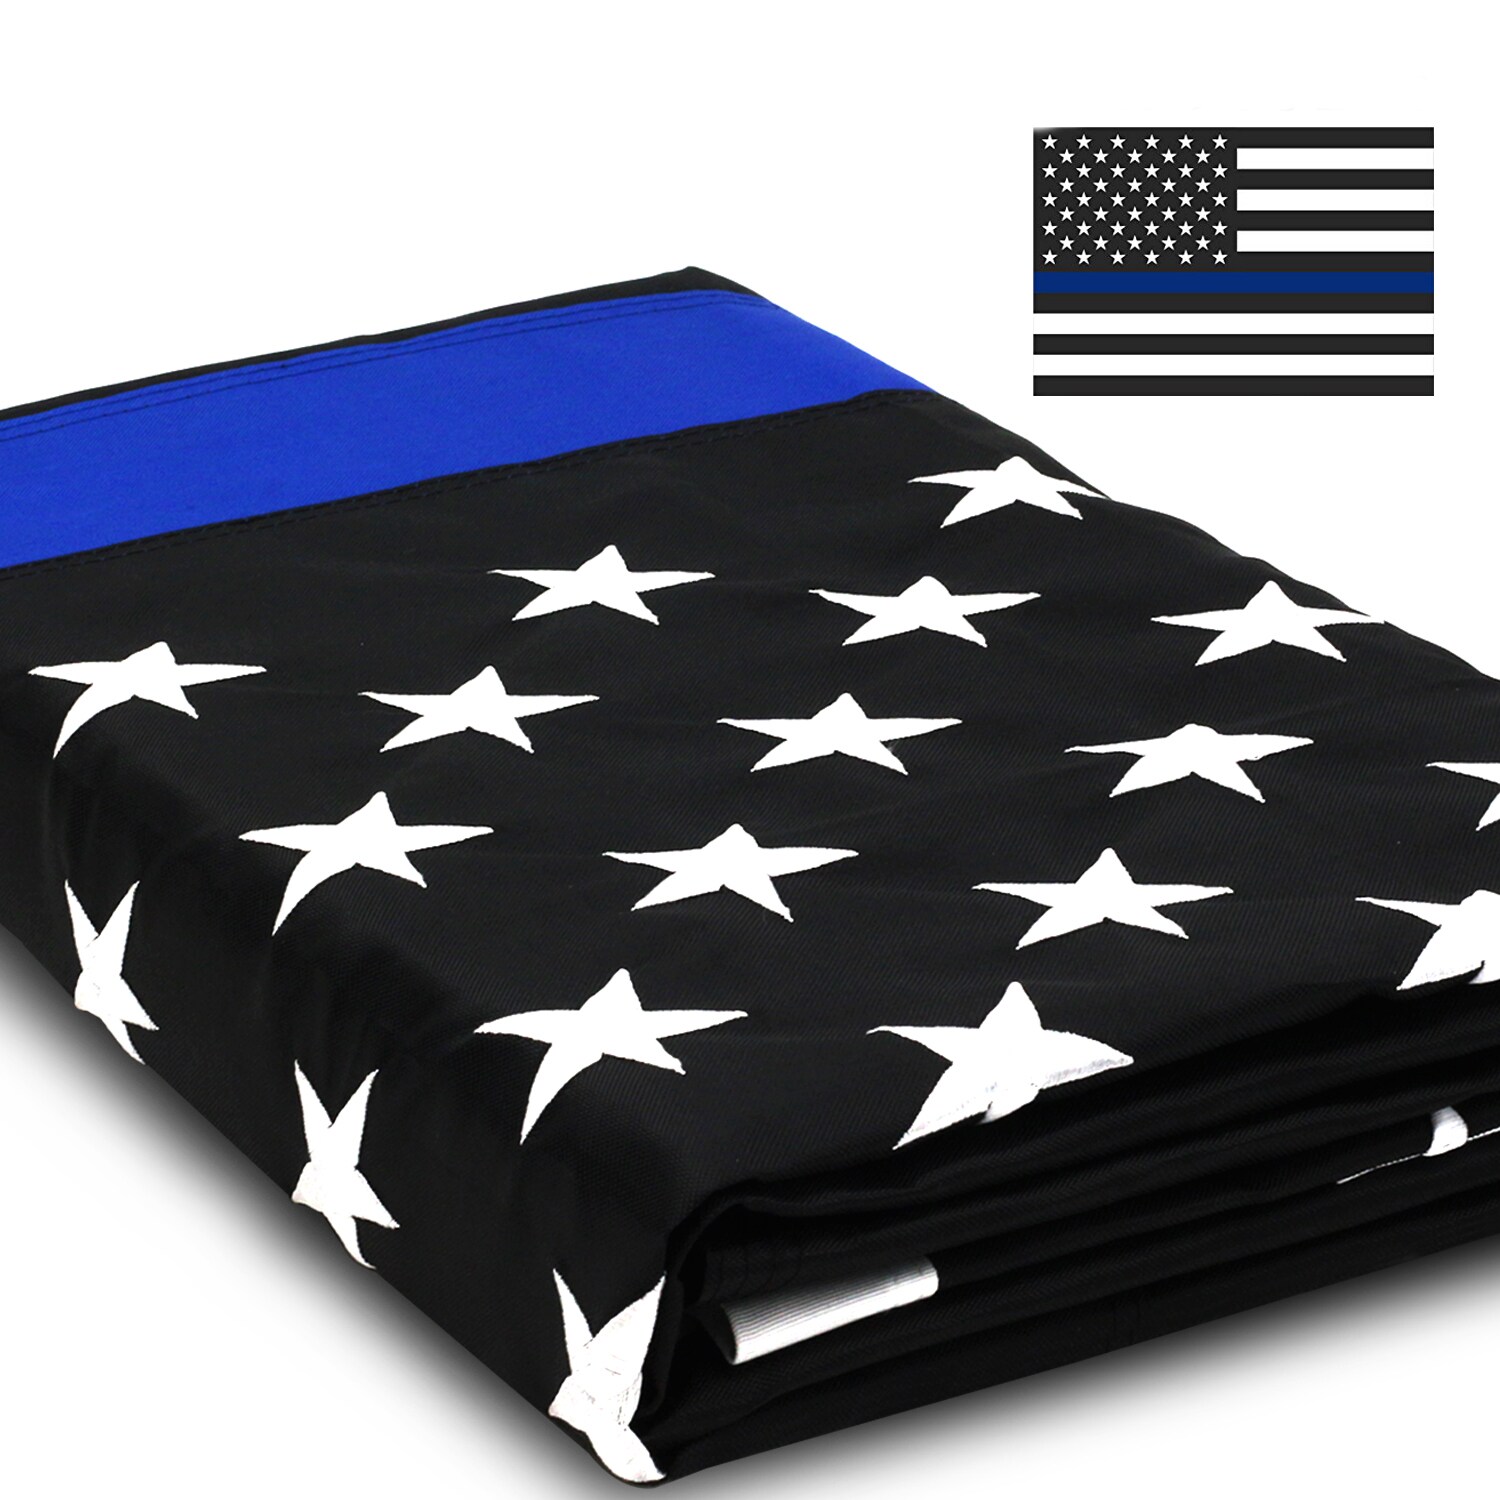 USA American Police Thin Blue Line Flags 4"x6" Desk Set Table Black Base 